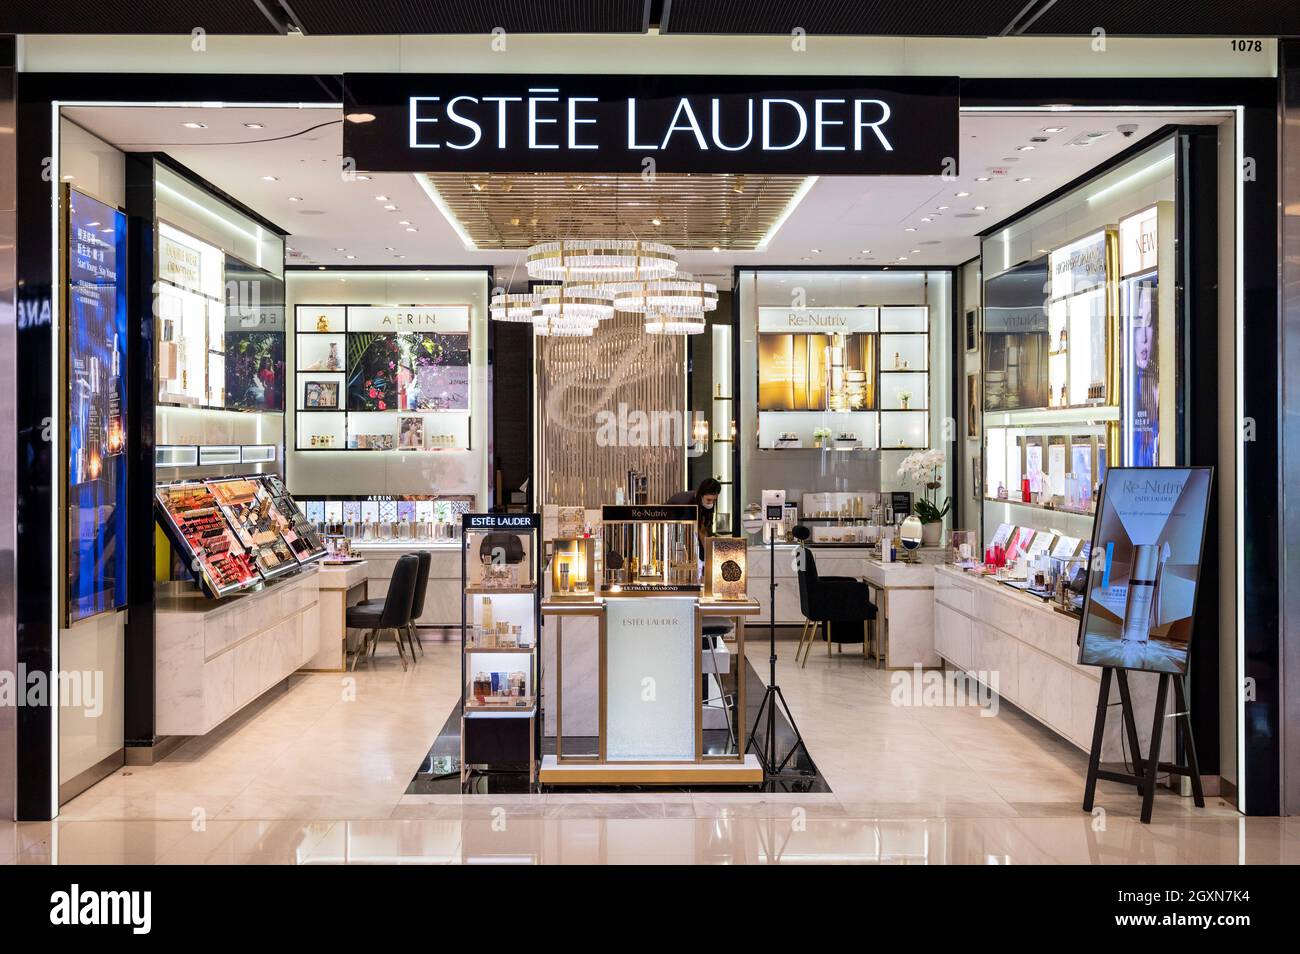 759 Estée Lauder Companies Stock Photos, High-Res Pictures, and Images -  Getty Images